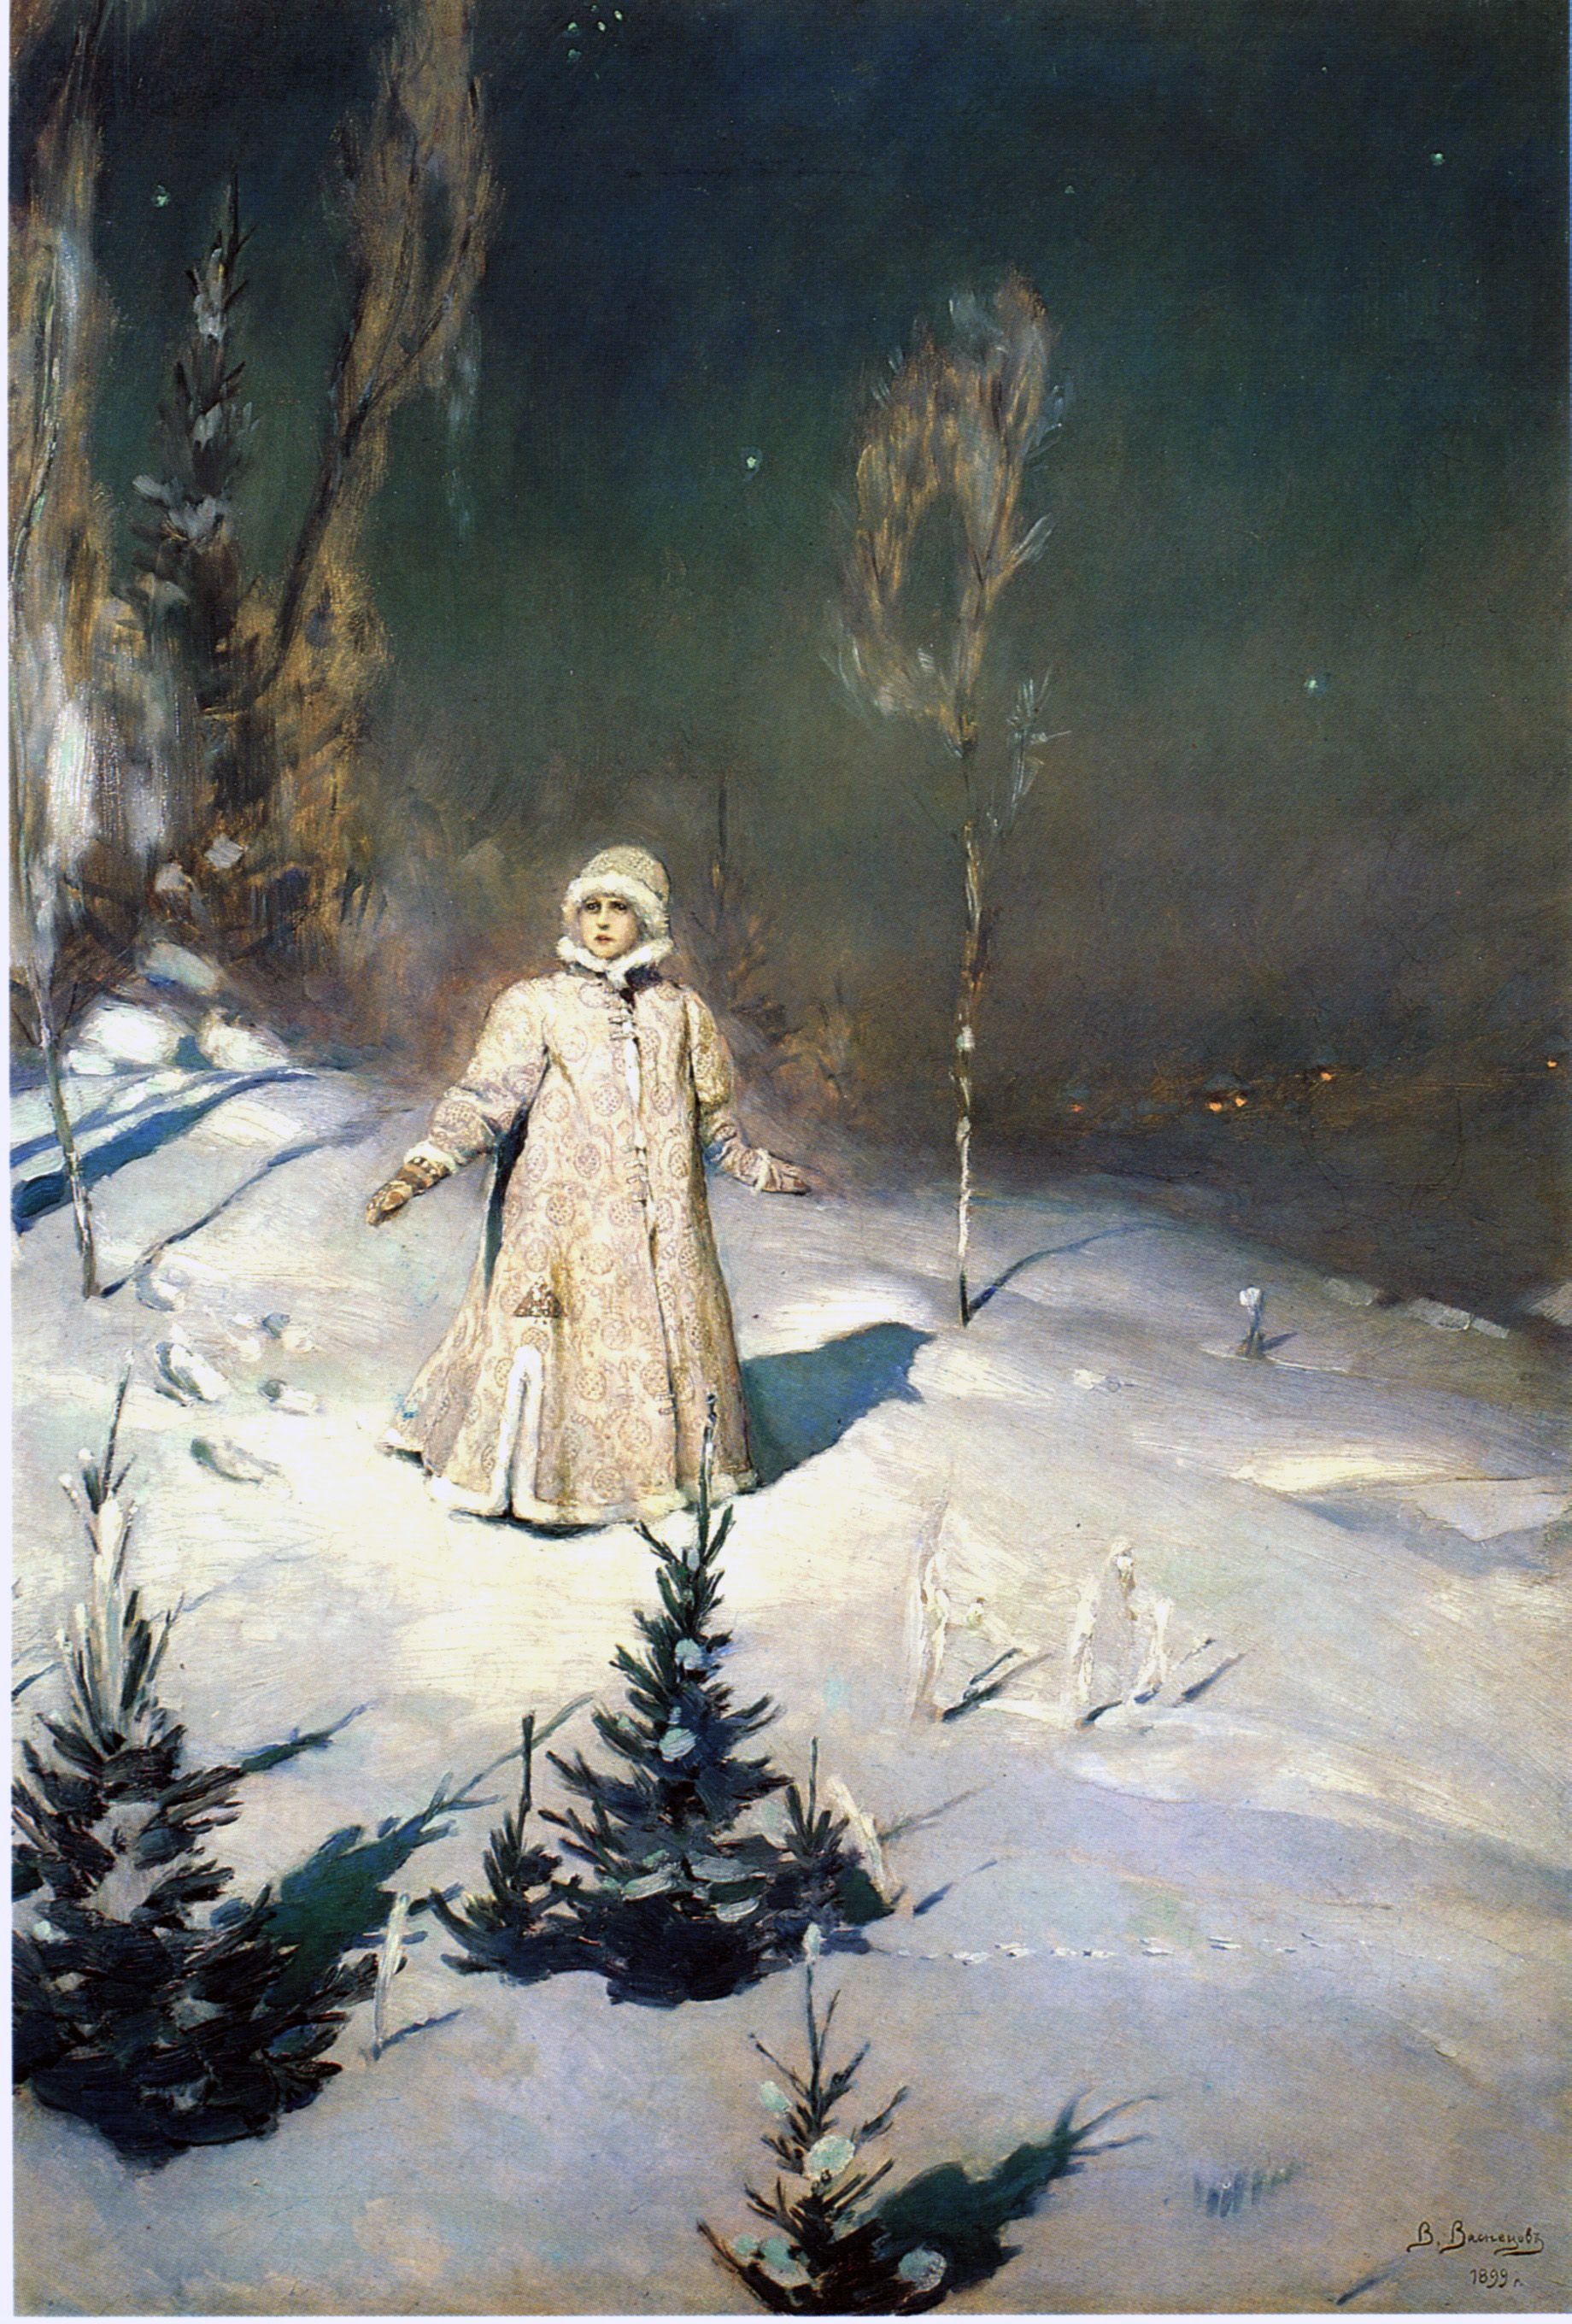 Snegurochka representada en una pintura poe Viktor Vasnetsov.